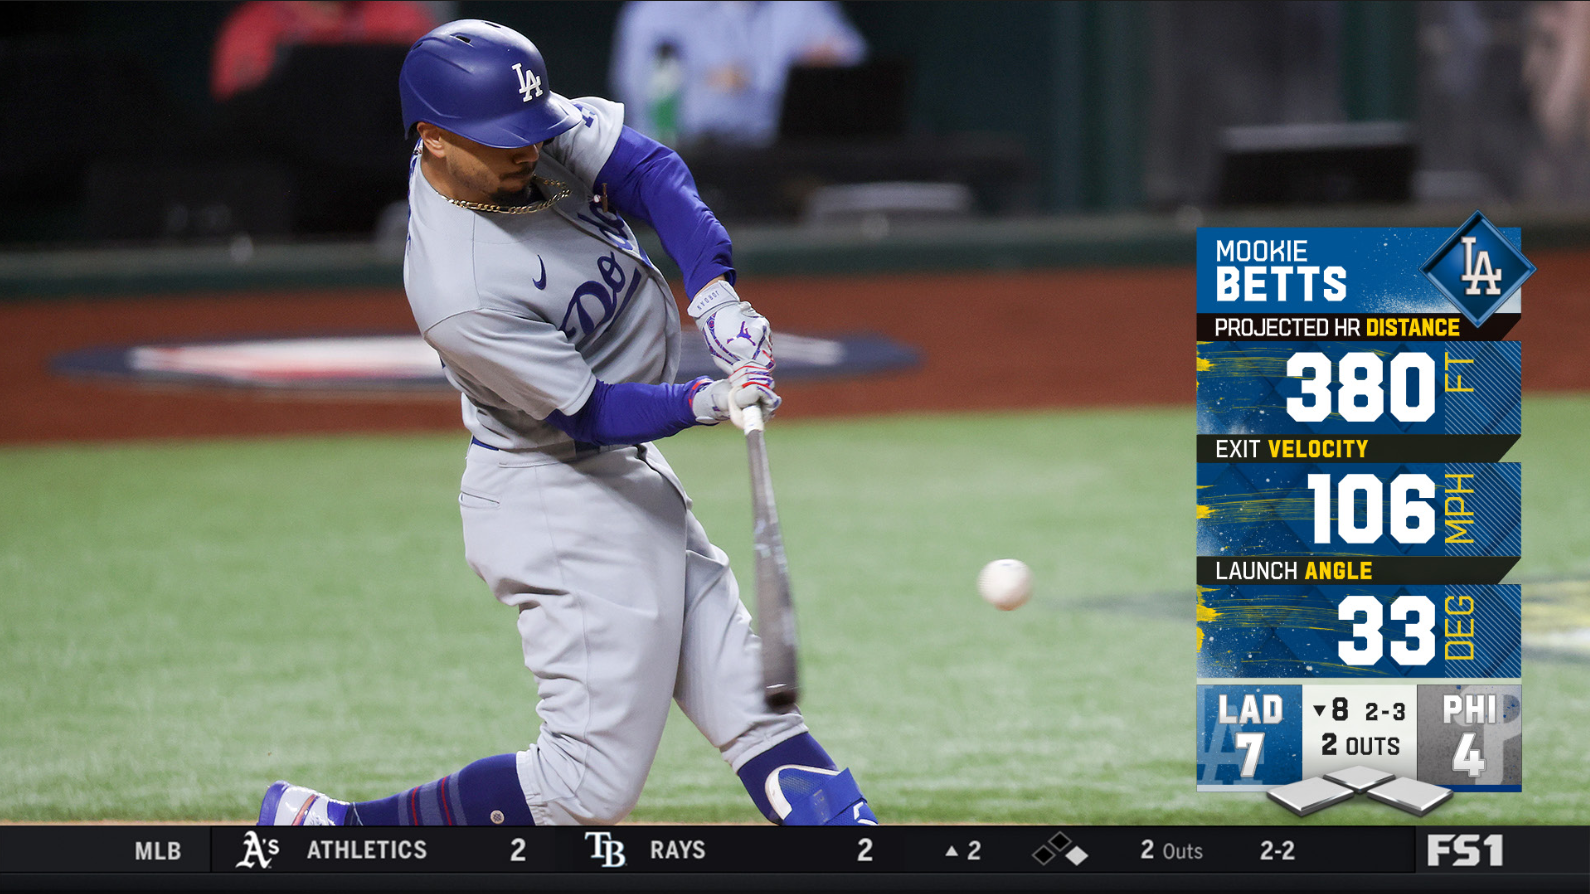 MLB Postseason 2021 Foxs New Graphics Package Showcases Gamification, Natural Elements of Baseball